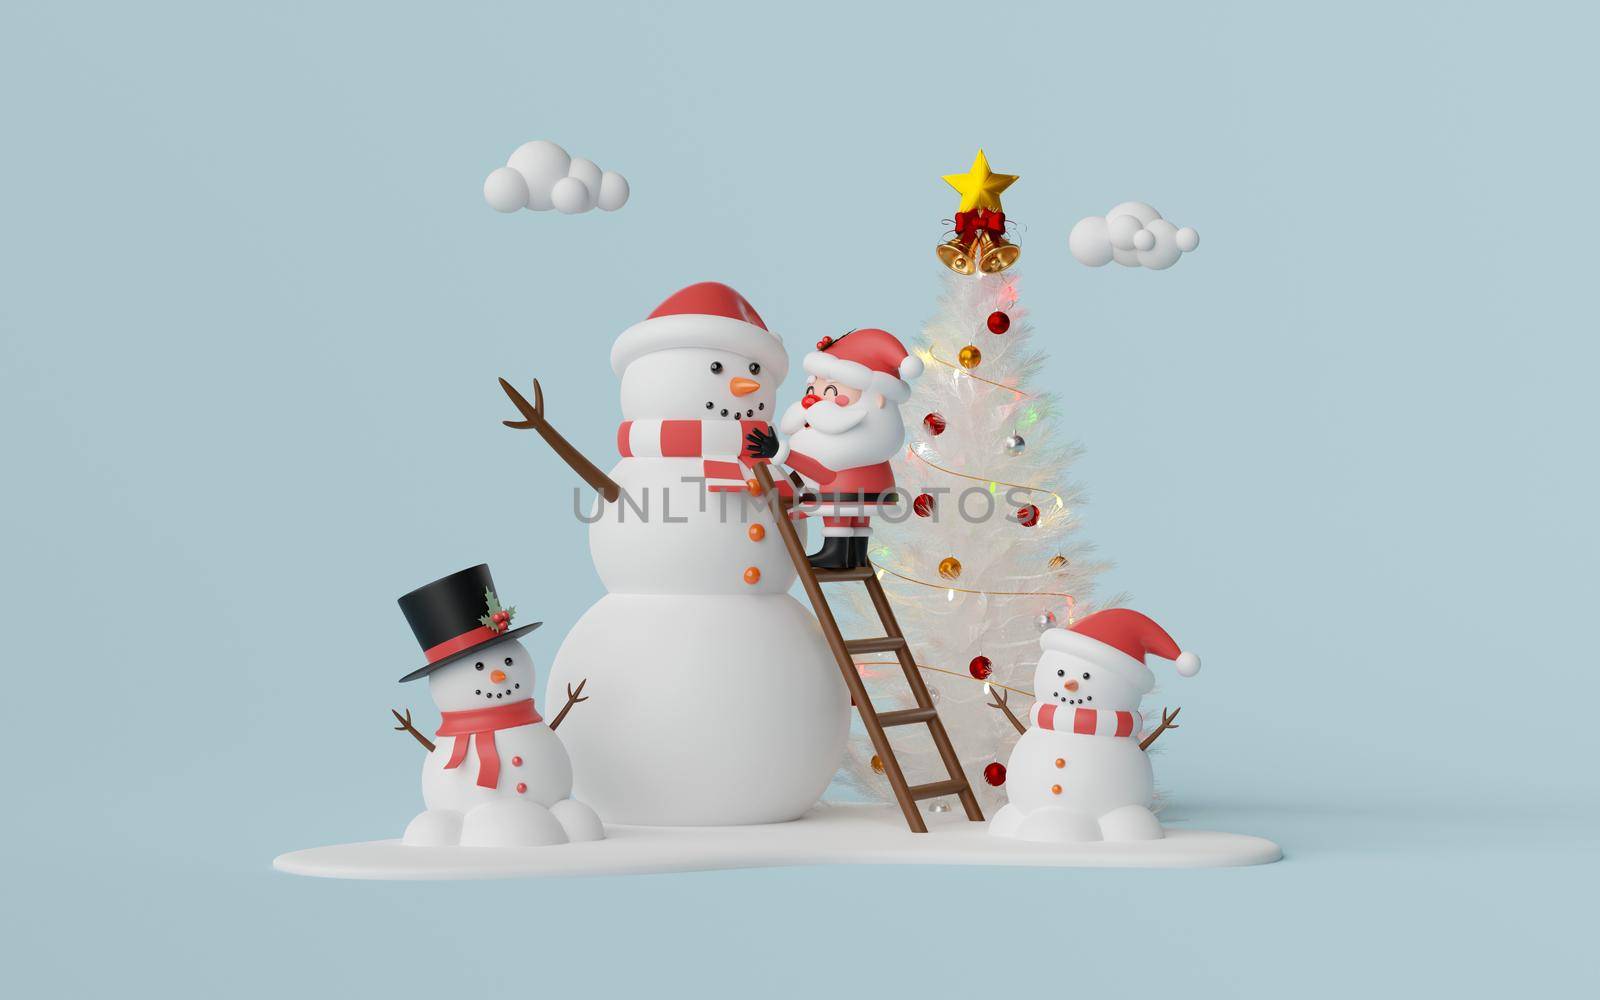 Santa Claus modeling snowman near Christmas tree, 3d illustration by nutzchotwarut